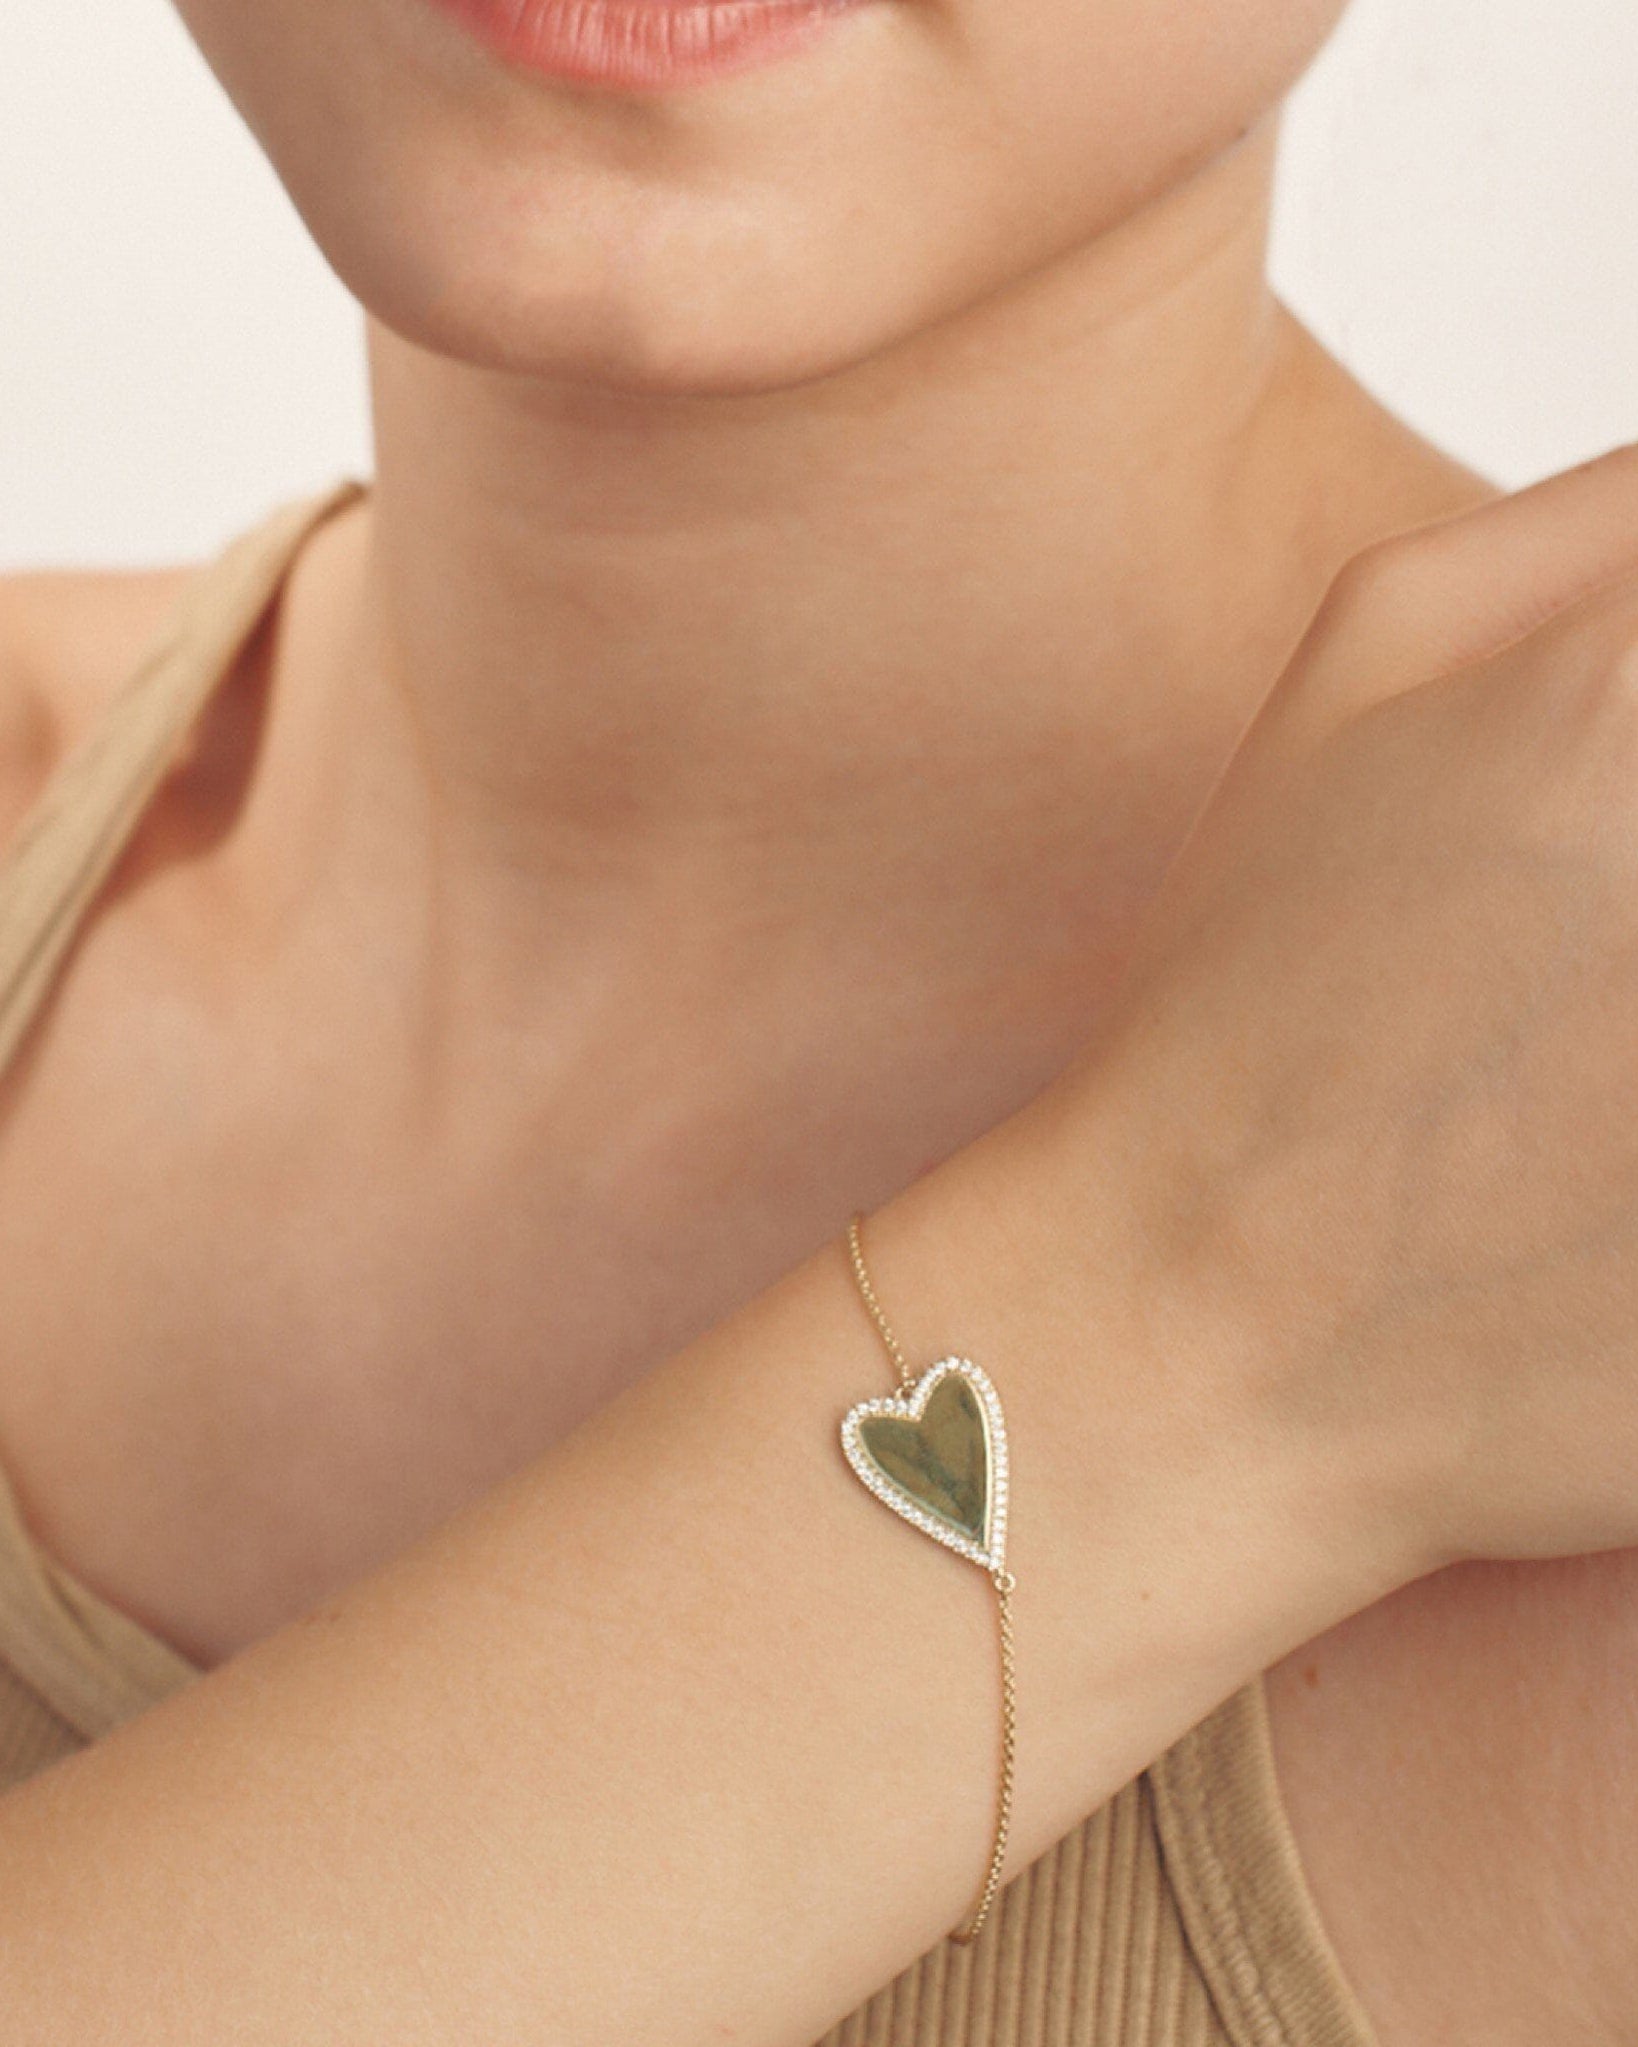 Outlined Diamond Heart Bracelet - 18K Gold Vermeil Bracelets magal-dev 